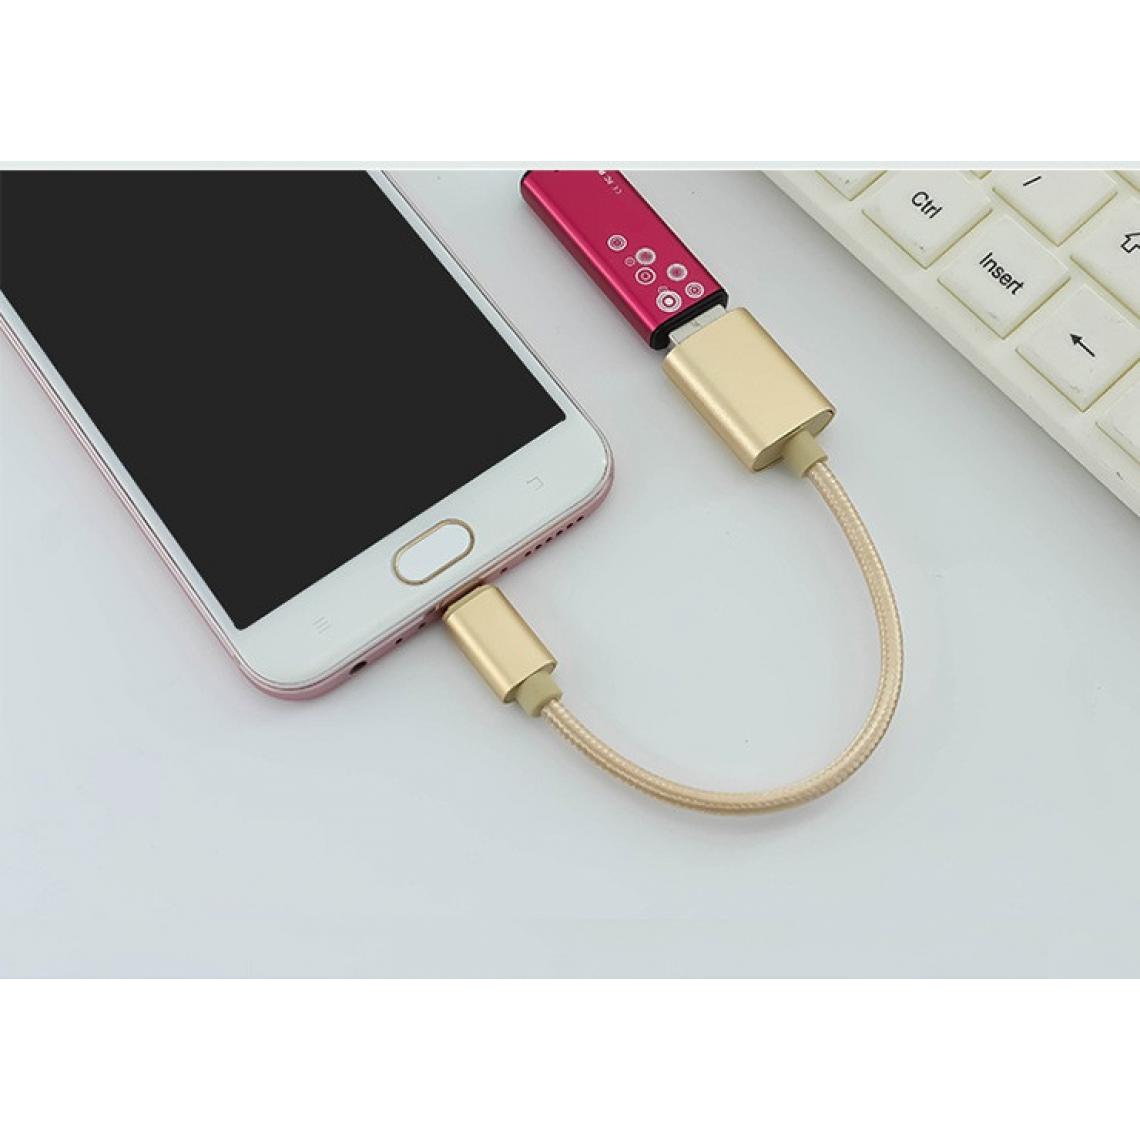 Shot - Adaptateur Type C/USB pour SAMSUNG Galaxy A3 2017 Smartphone & MAC USB-C Clef (OR) - Autres accessoires smartphone